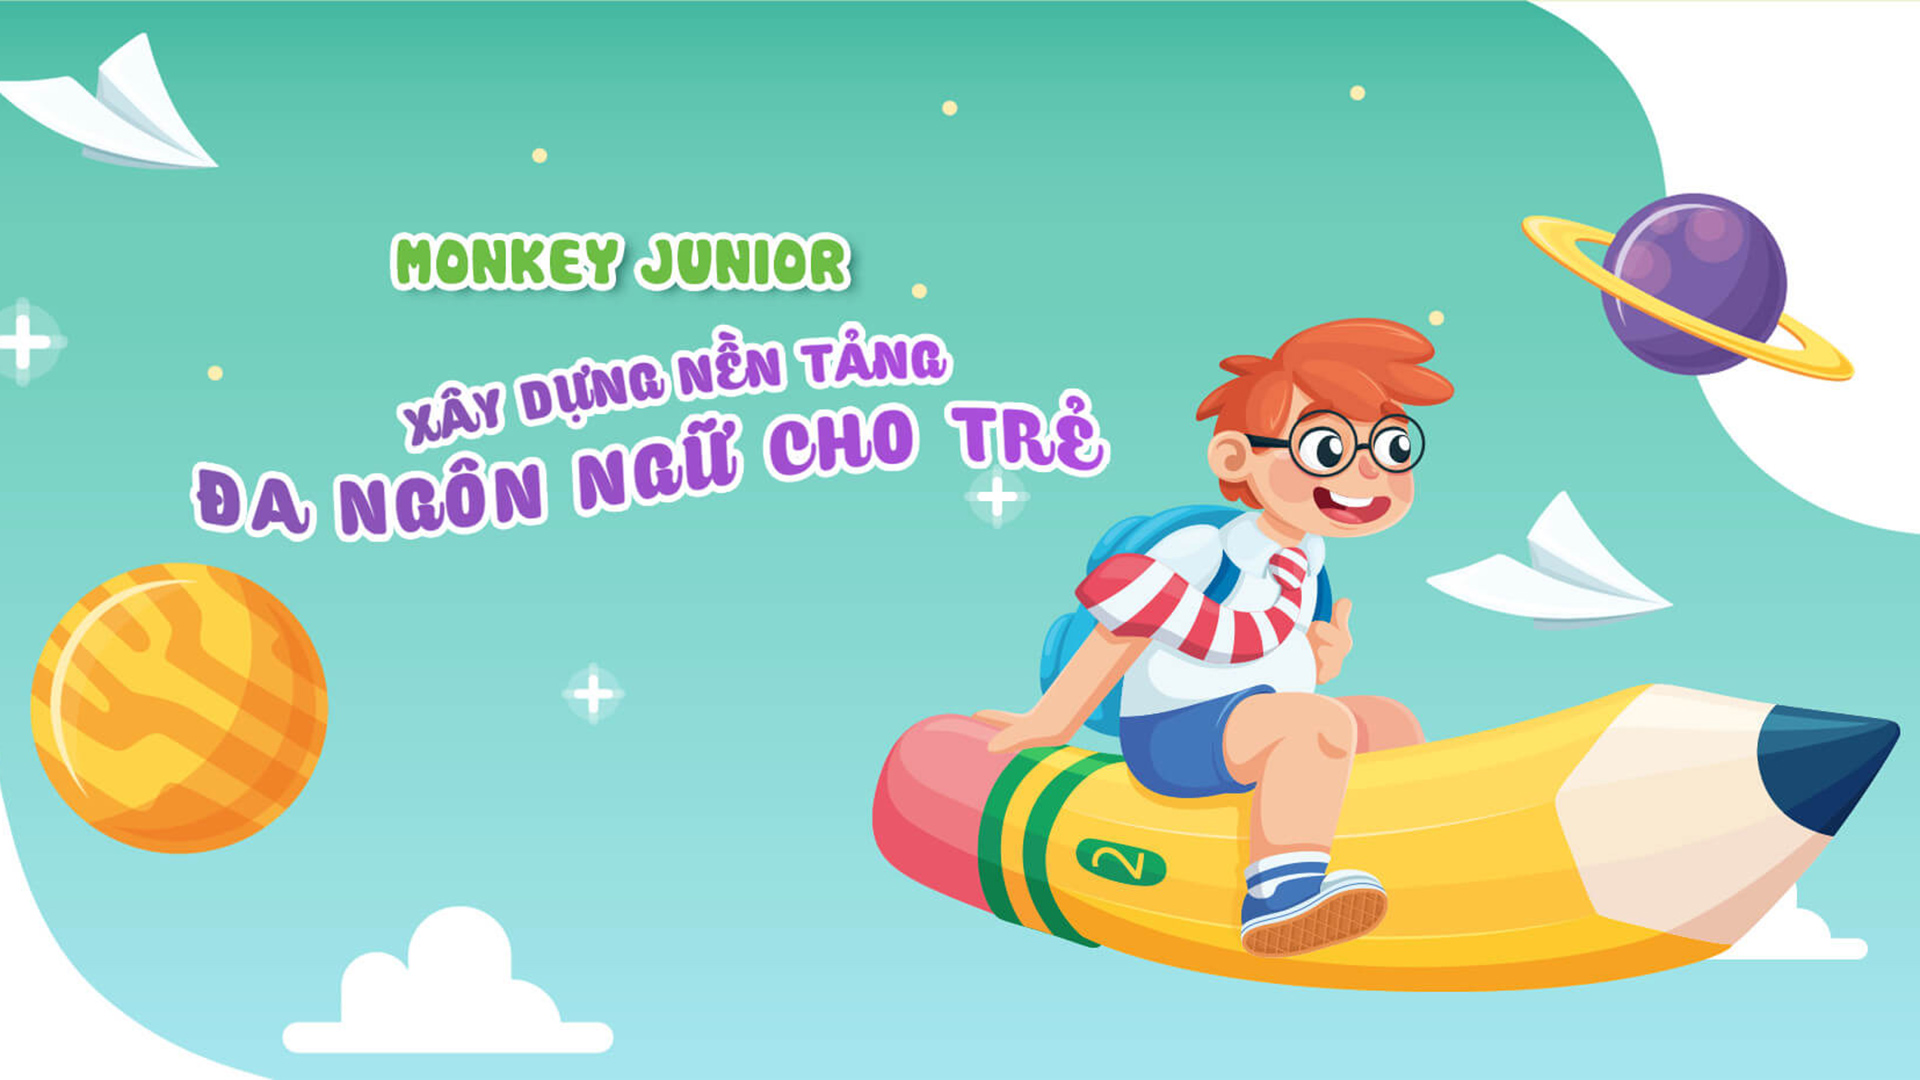 monkey junior app coupon code